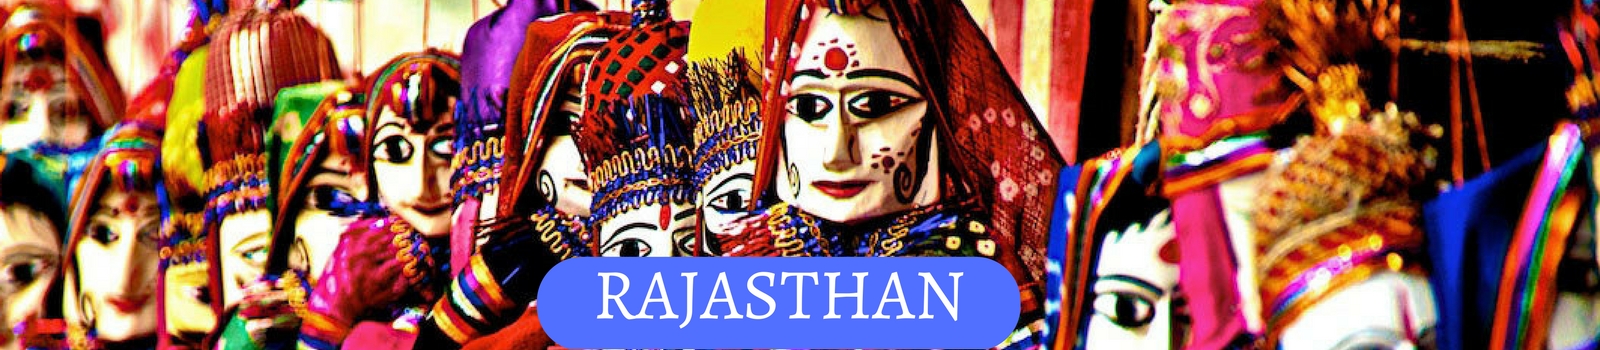 Rajasthan-India